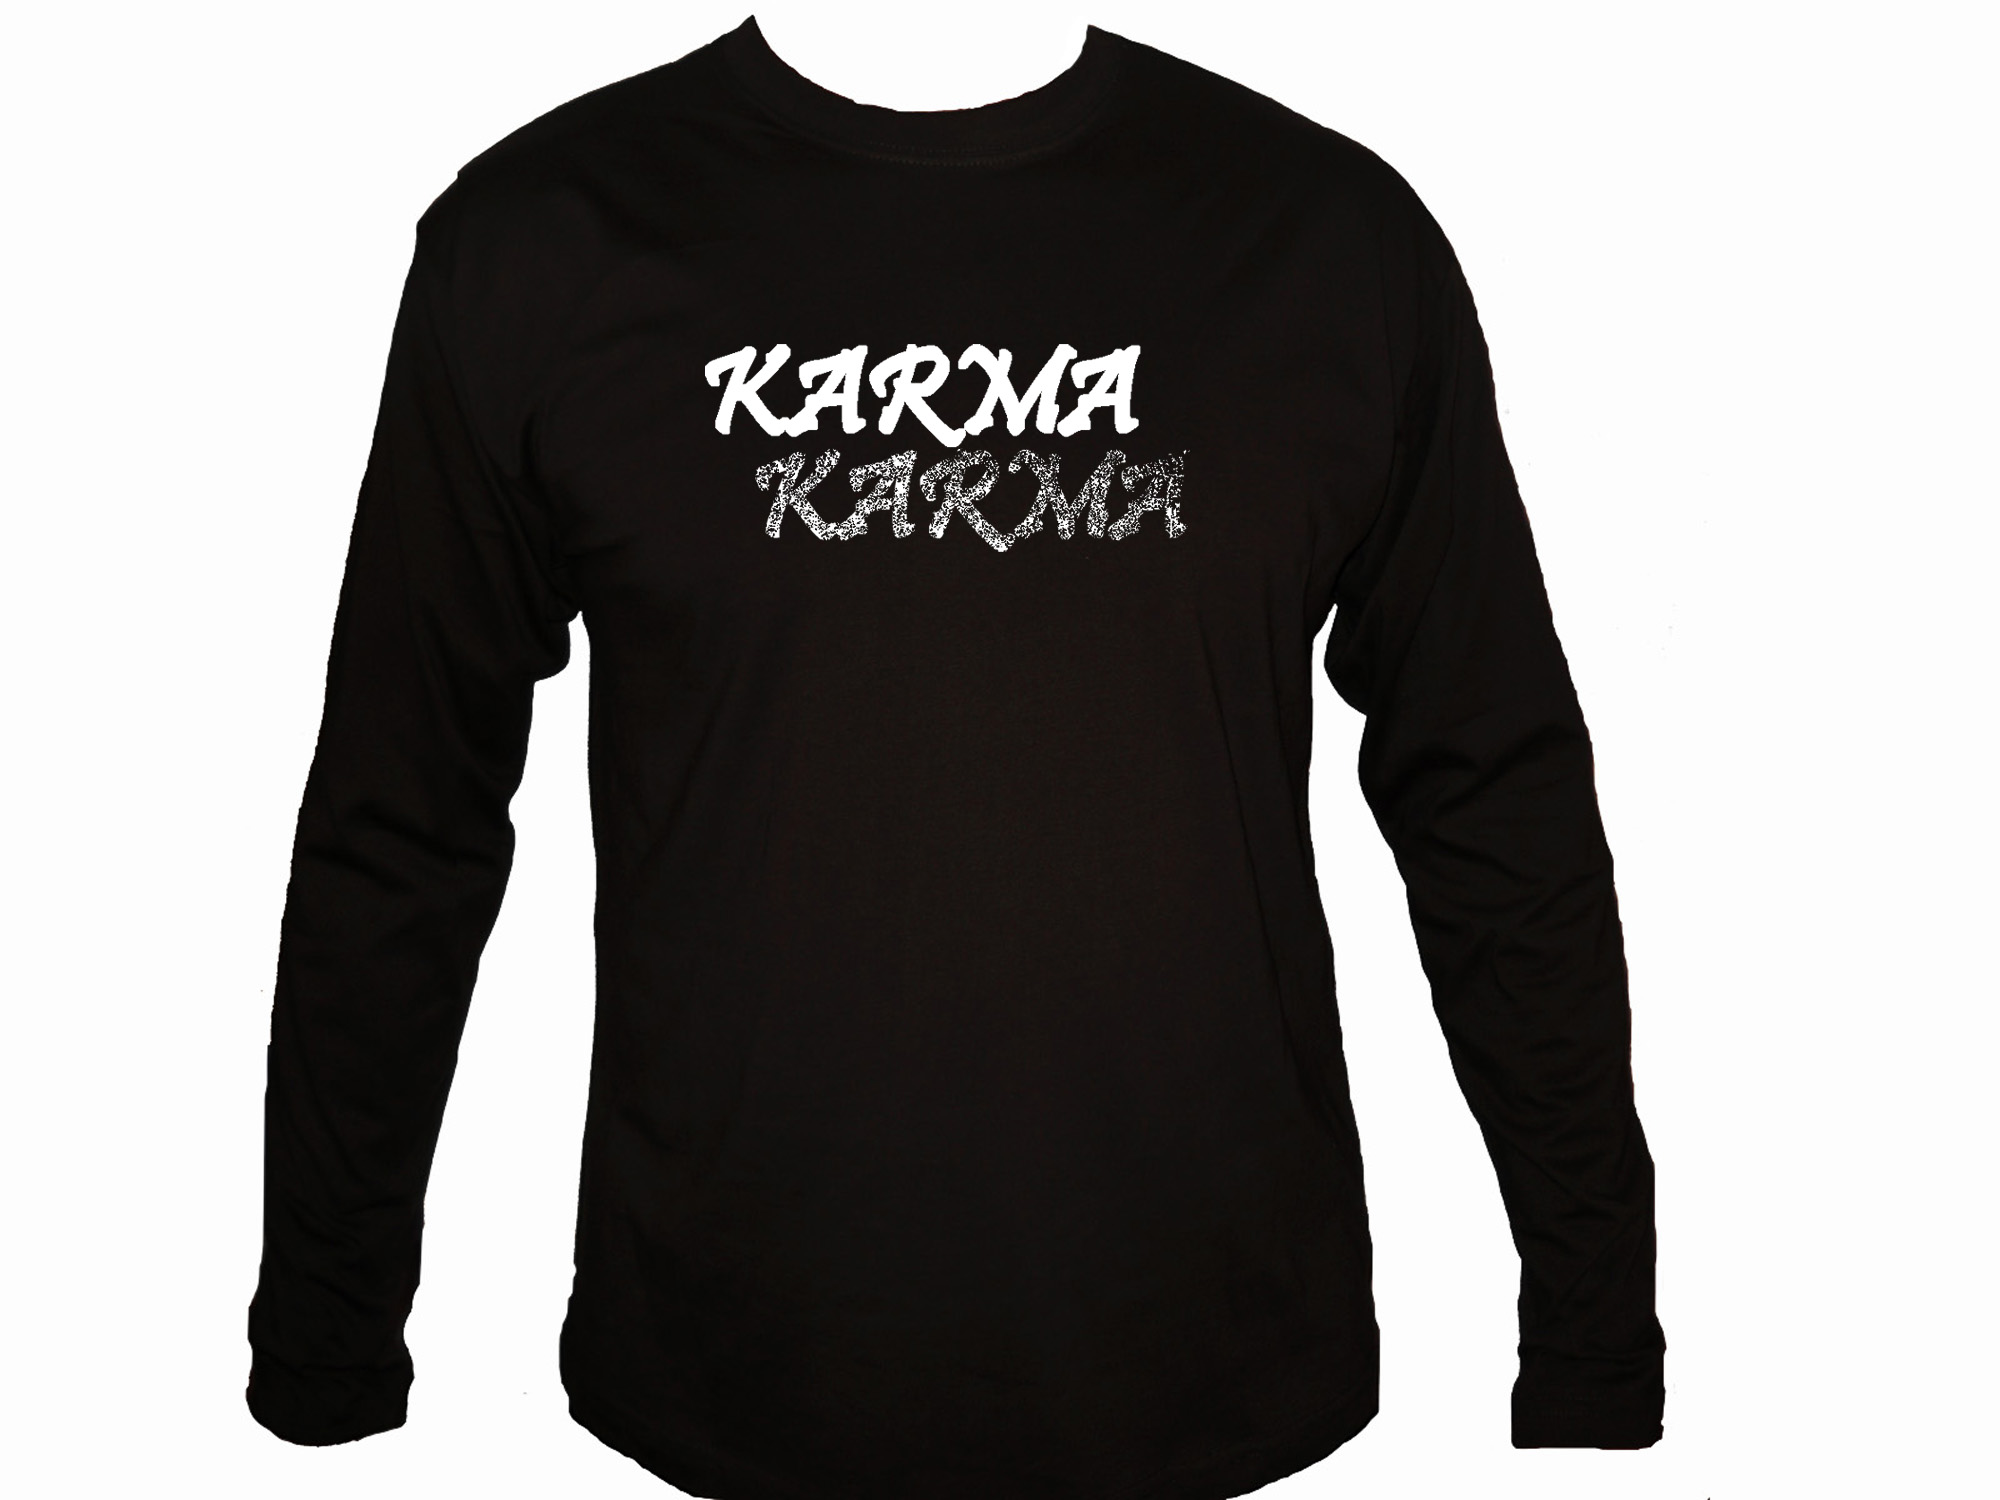 Karma Buddhist sleeved t-shirt